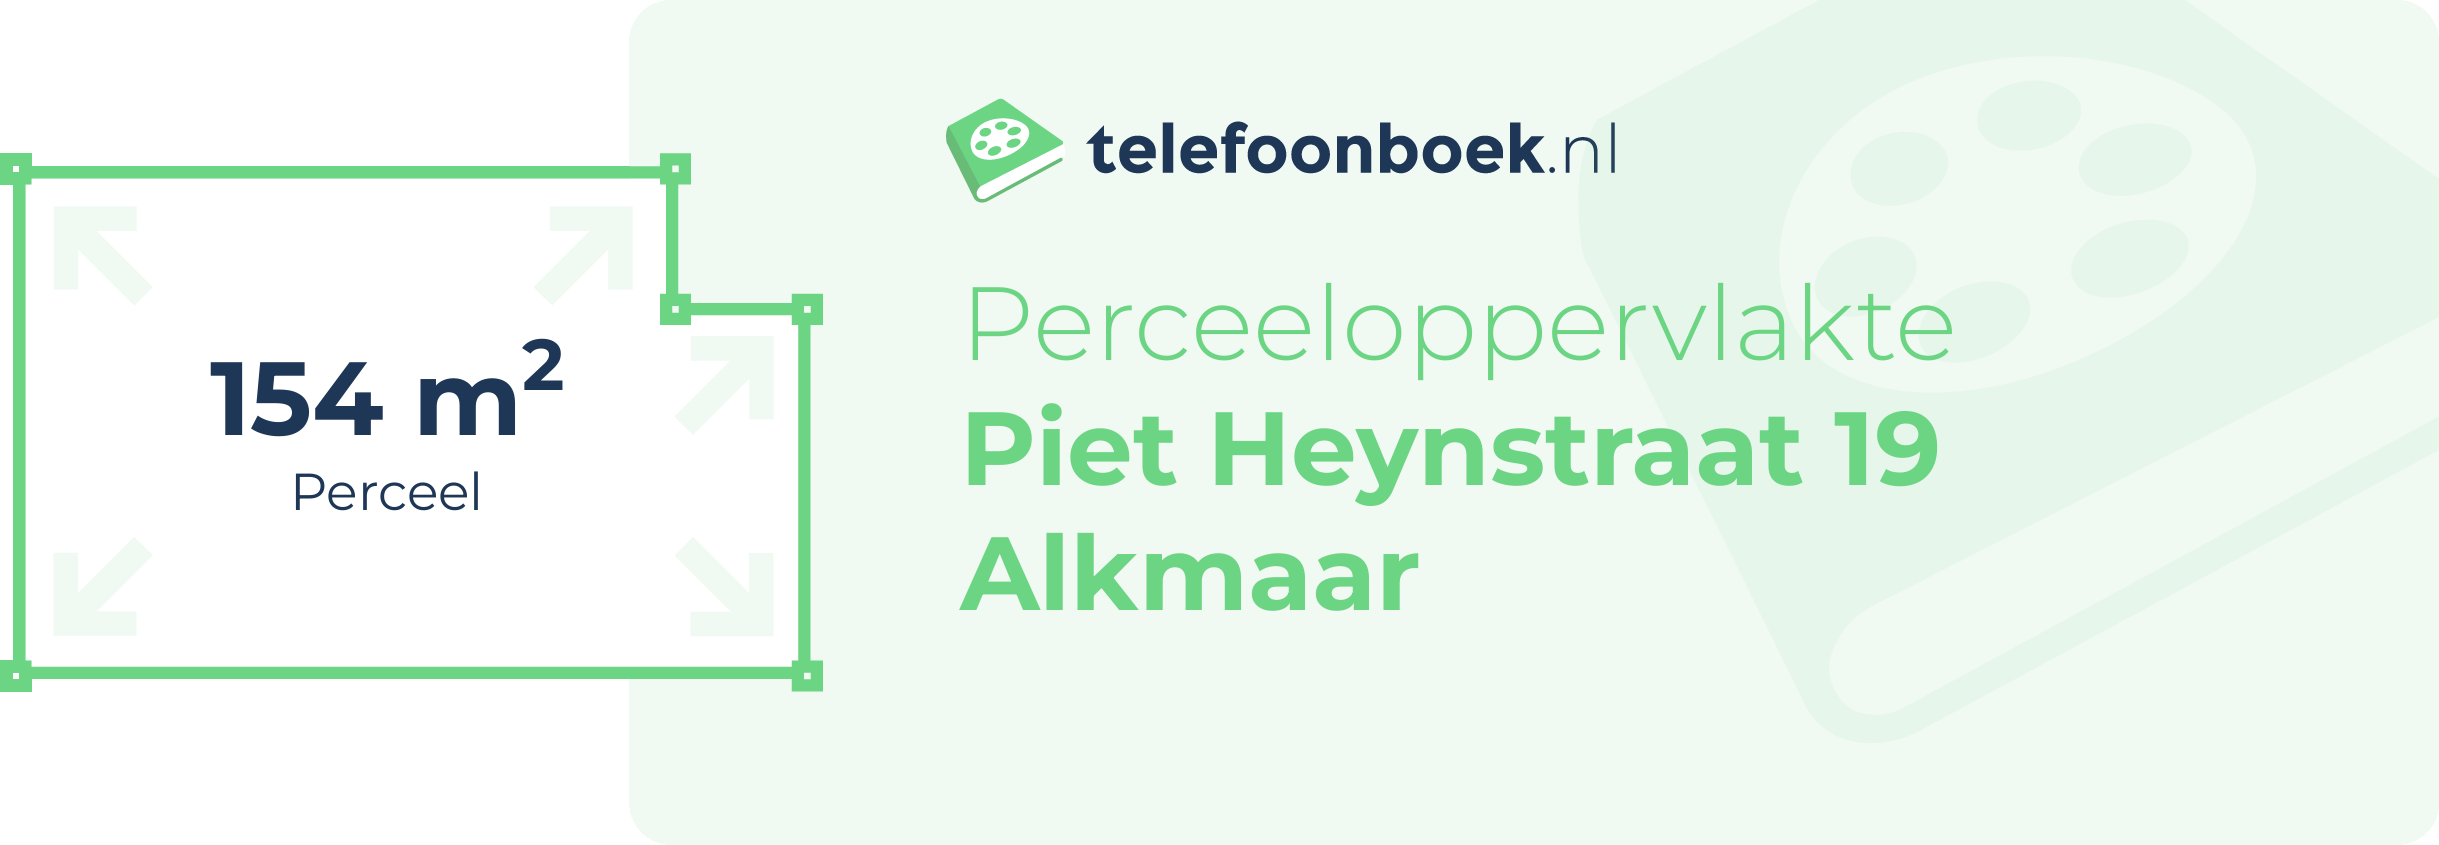 Perceeloppervlakte Piet Heynstraat 19 Alkmaar